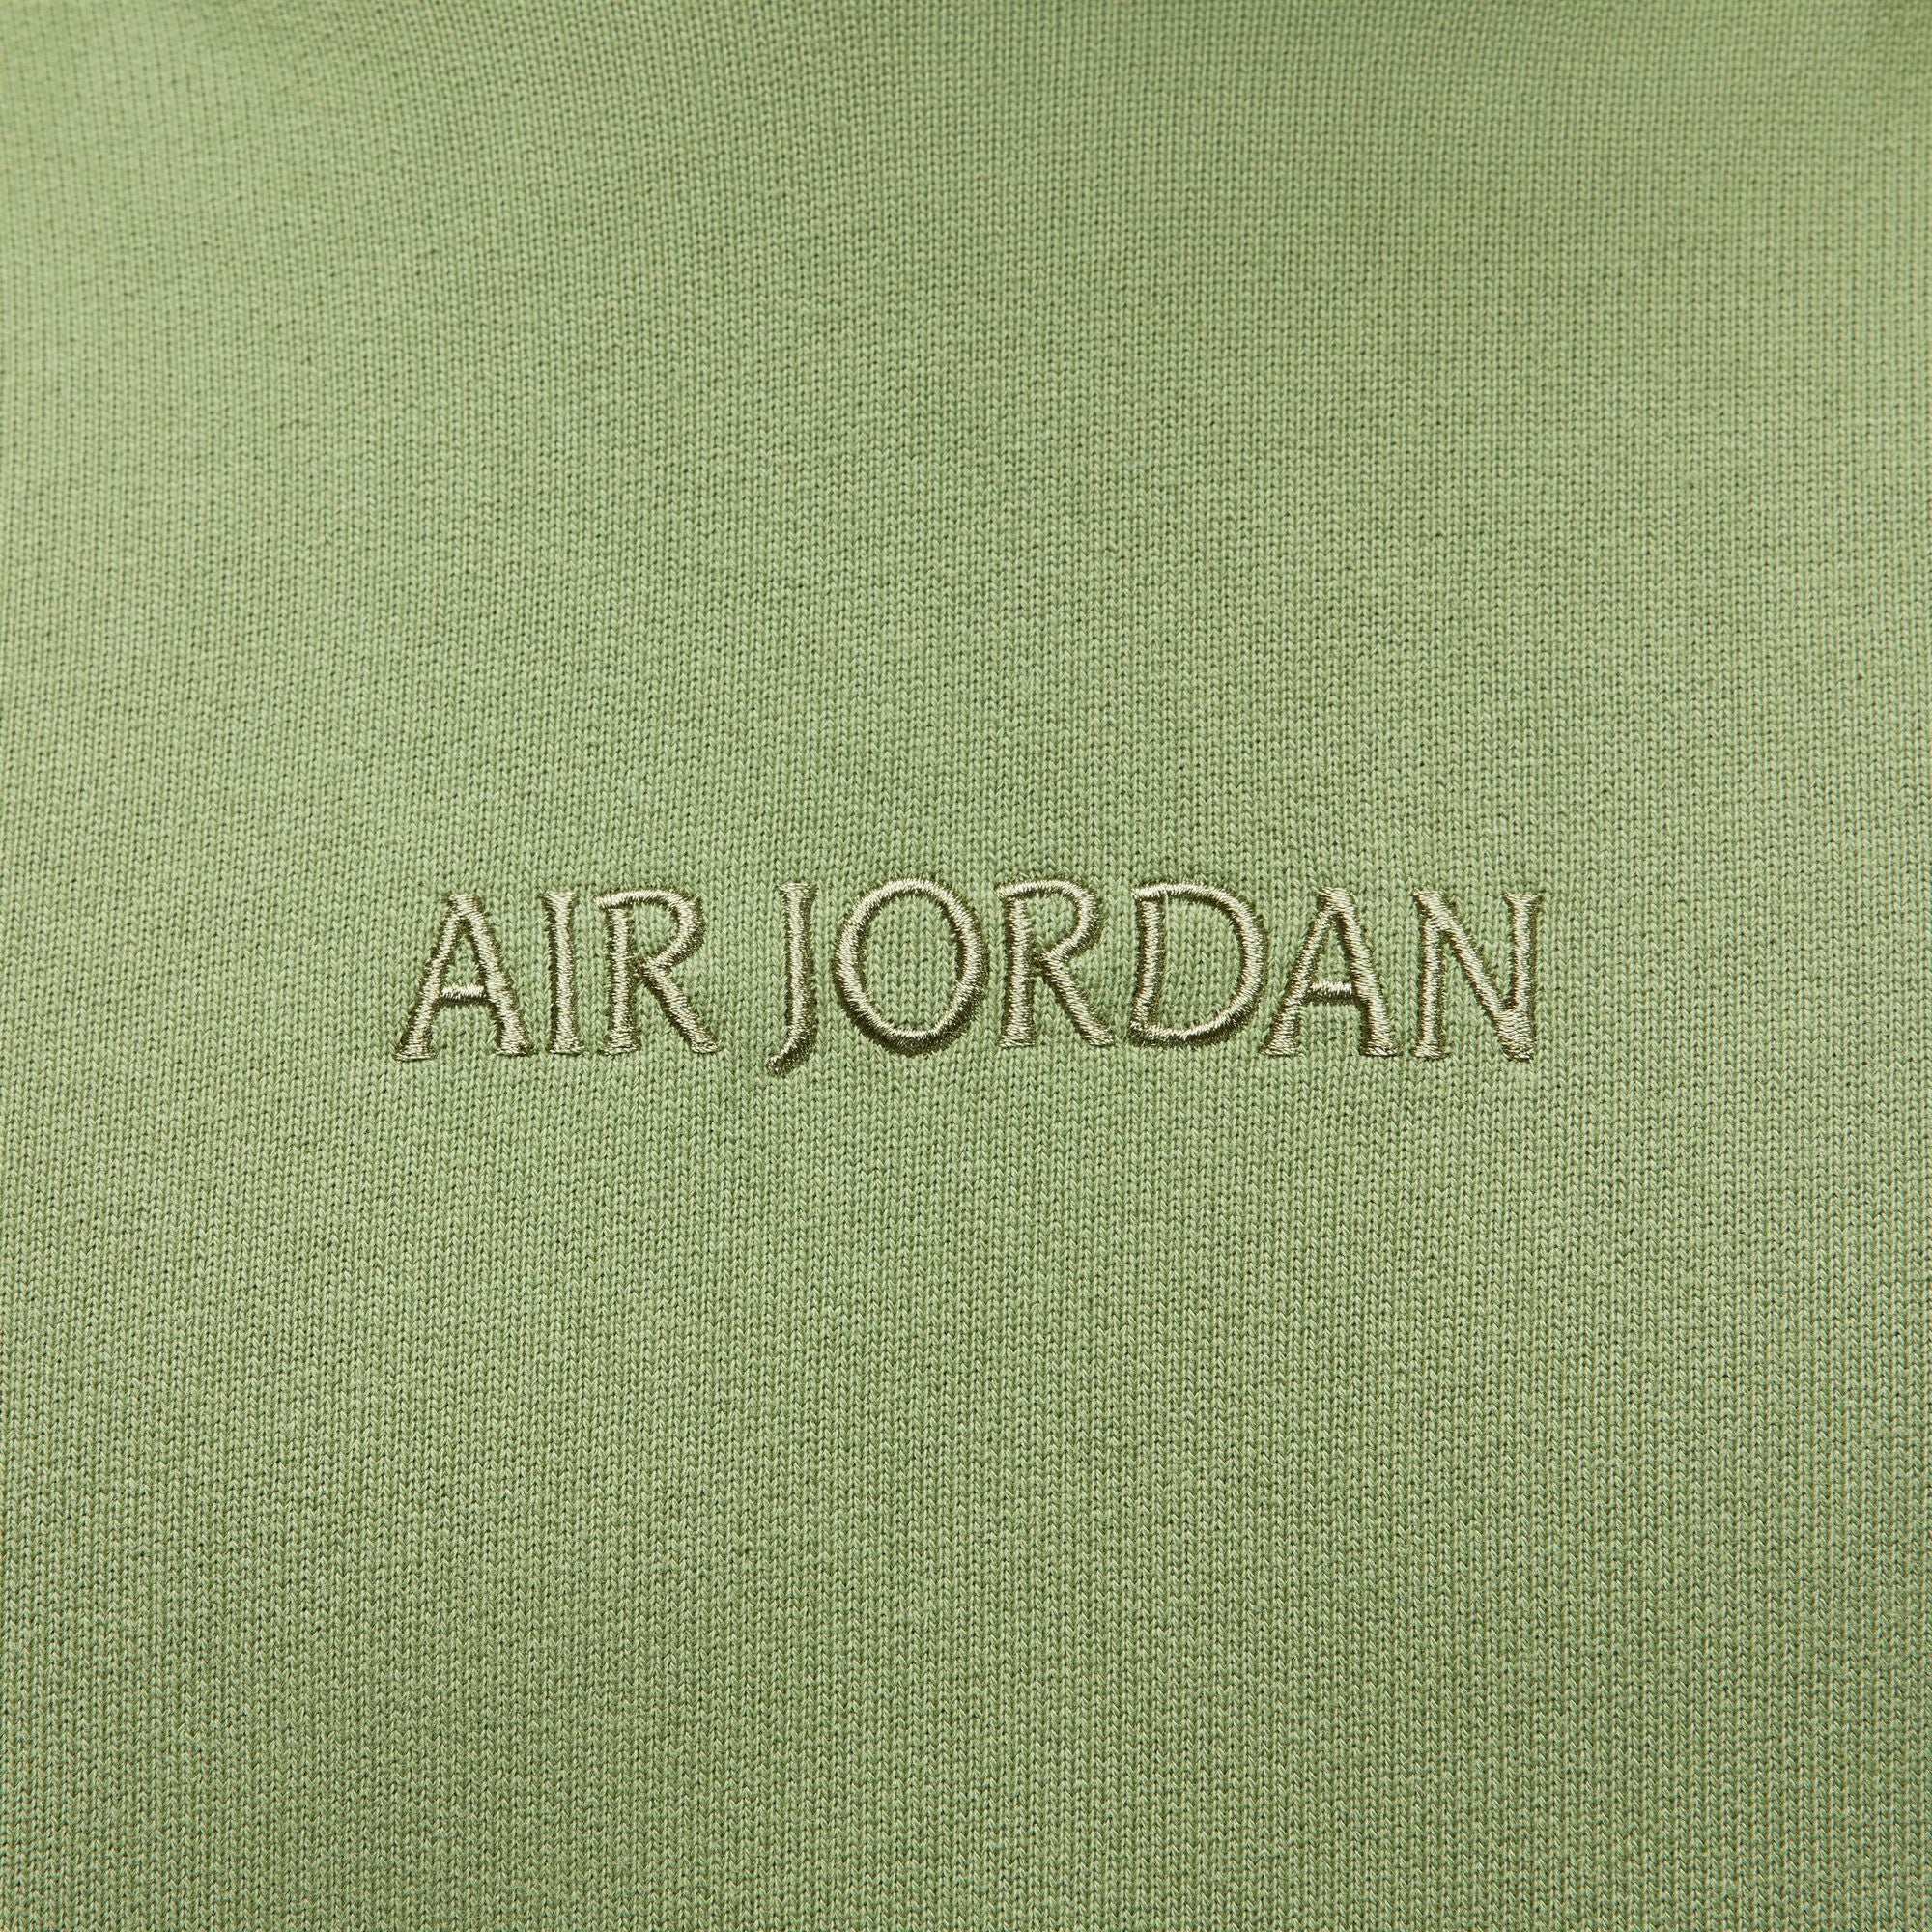 Air Jordan Wordmark Men's Fleece Hoodie